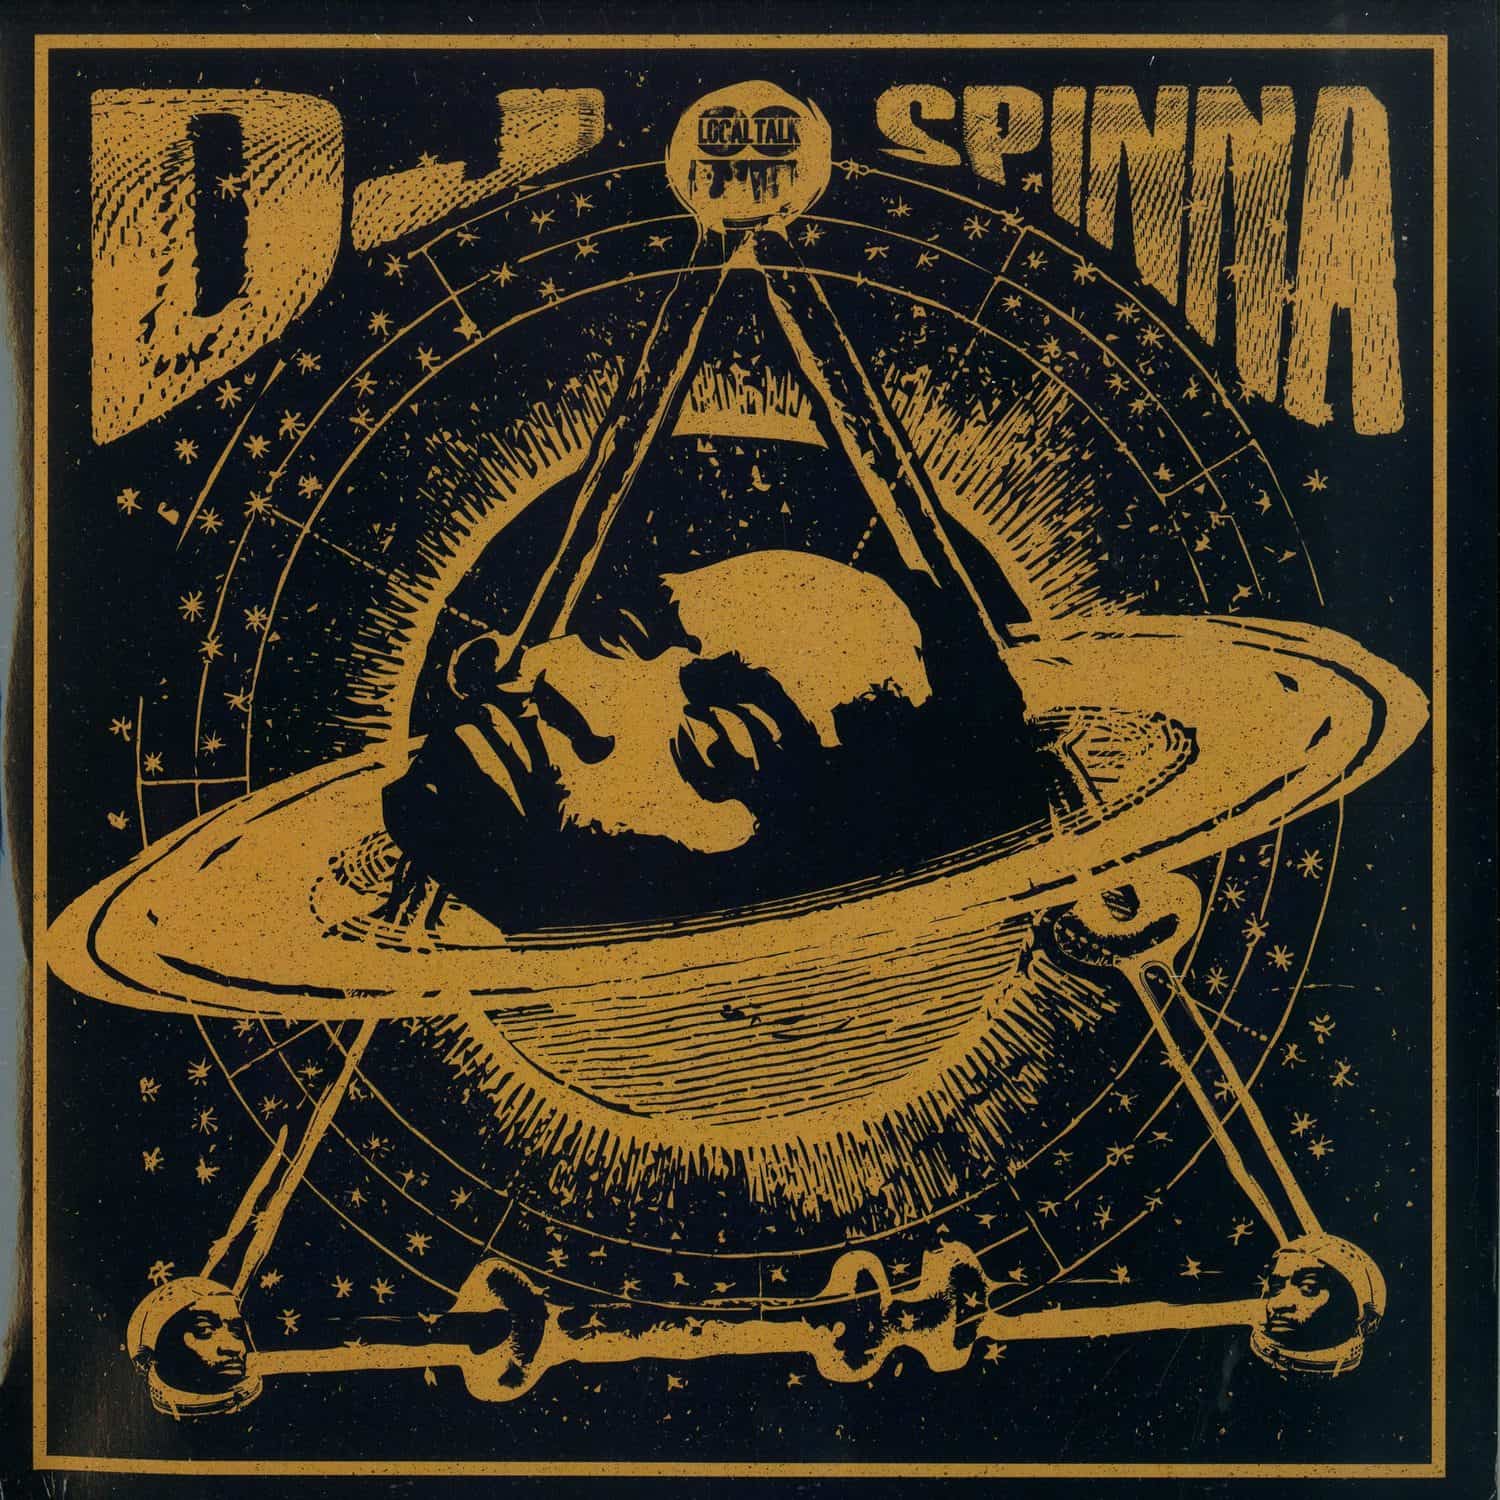 DJ Spinna - TB OR NOT TB / COSMOCRANK